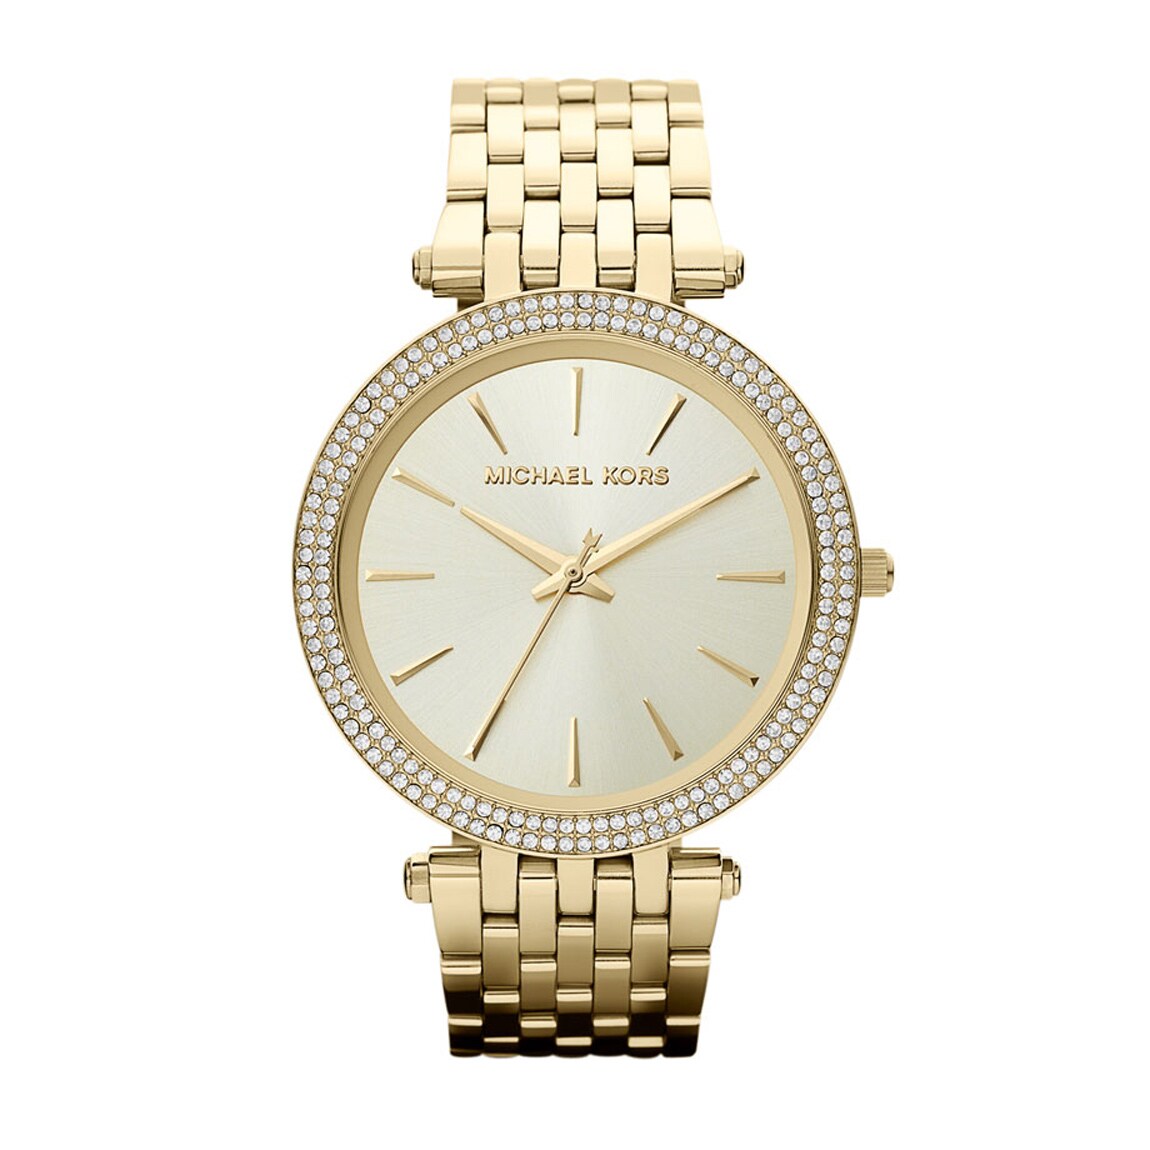 Michael Kors Women's MK3191 'Darci' Goldtone Watch - Overstock Shopping ...